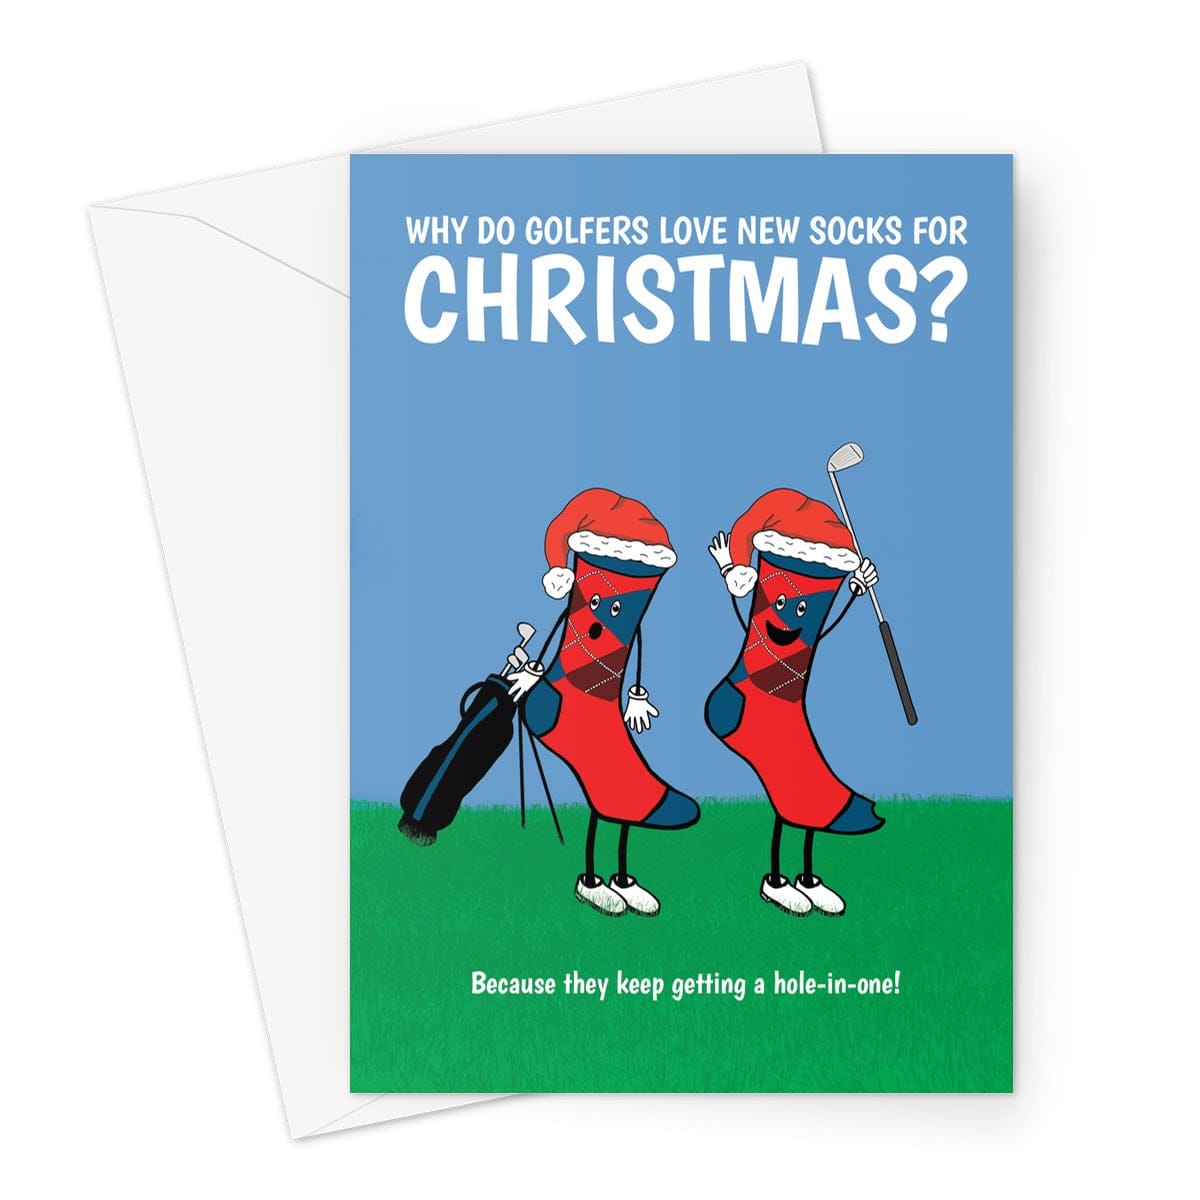 Merry Christmas Card - Funny Golf Socks Joke - Hole In One - A5 Greeting Card